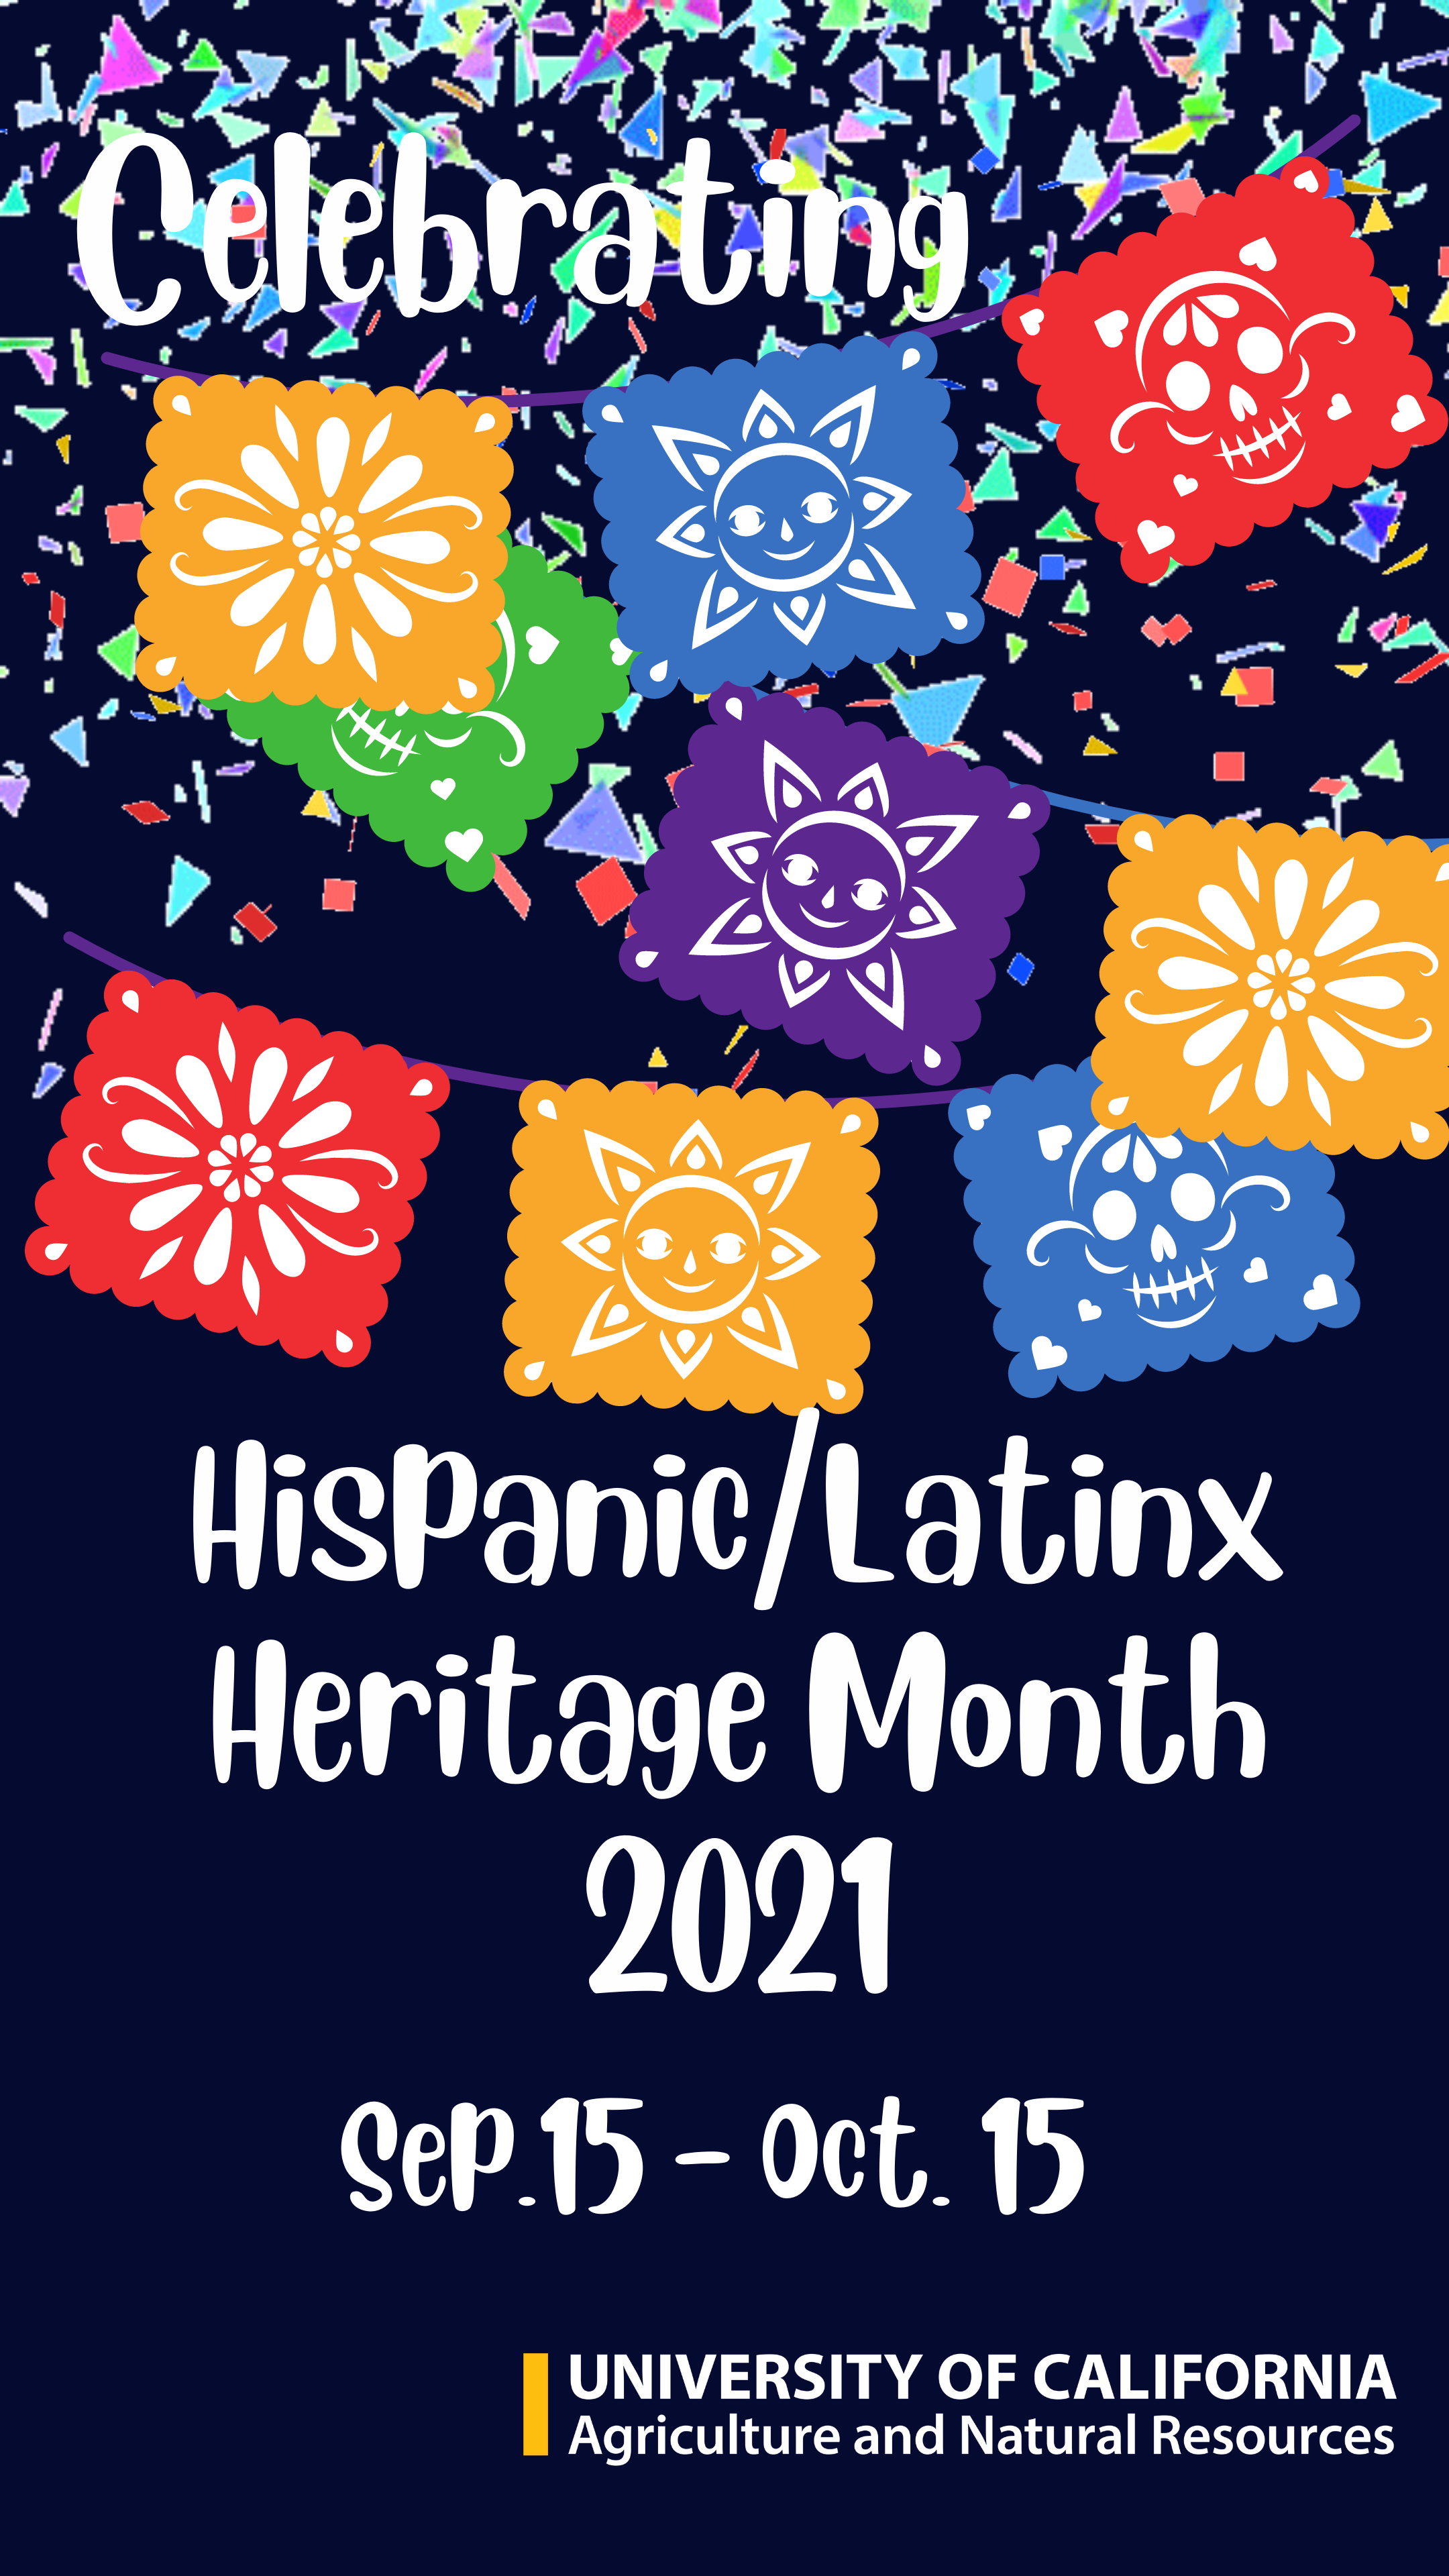 Sept. 17 – National Hispanic Heritage Month (Sept. 15-Oct. 15)